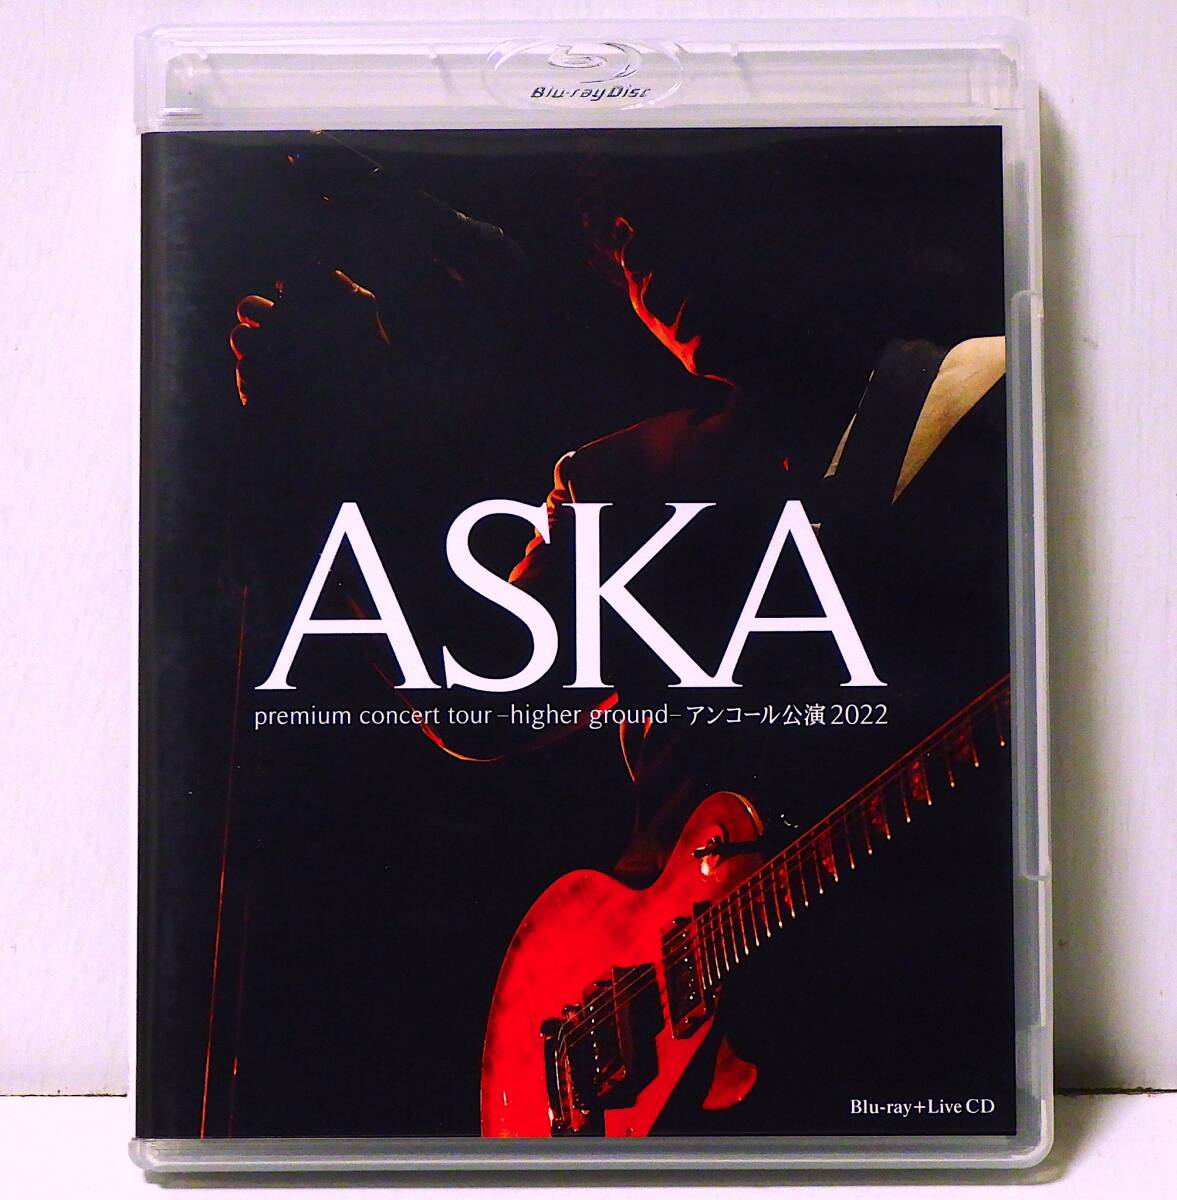 RARE ! 見本盤 ASKA PREMIUM CONCERT TOUR HIGHER GROUND アンコール公演 3DISC BLU-RAY + LIVE CD DDLB-0020 PROMO ! _画像1